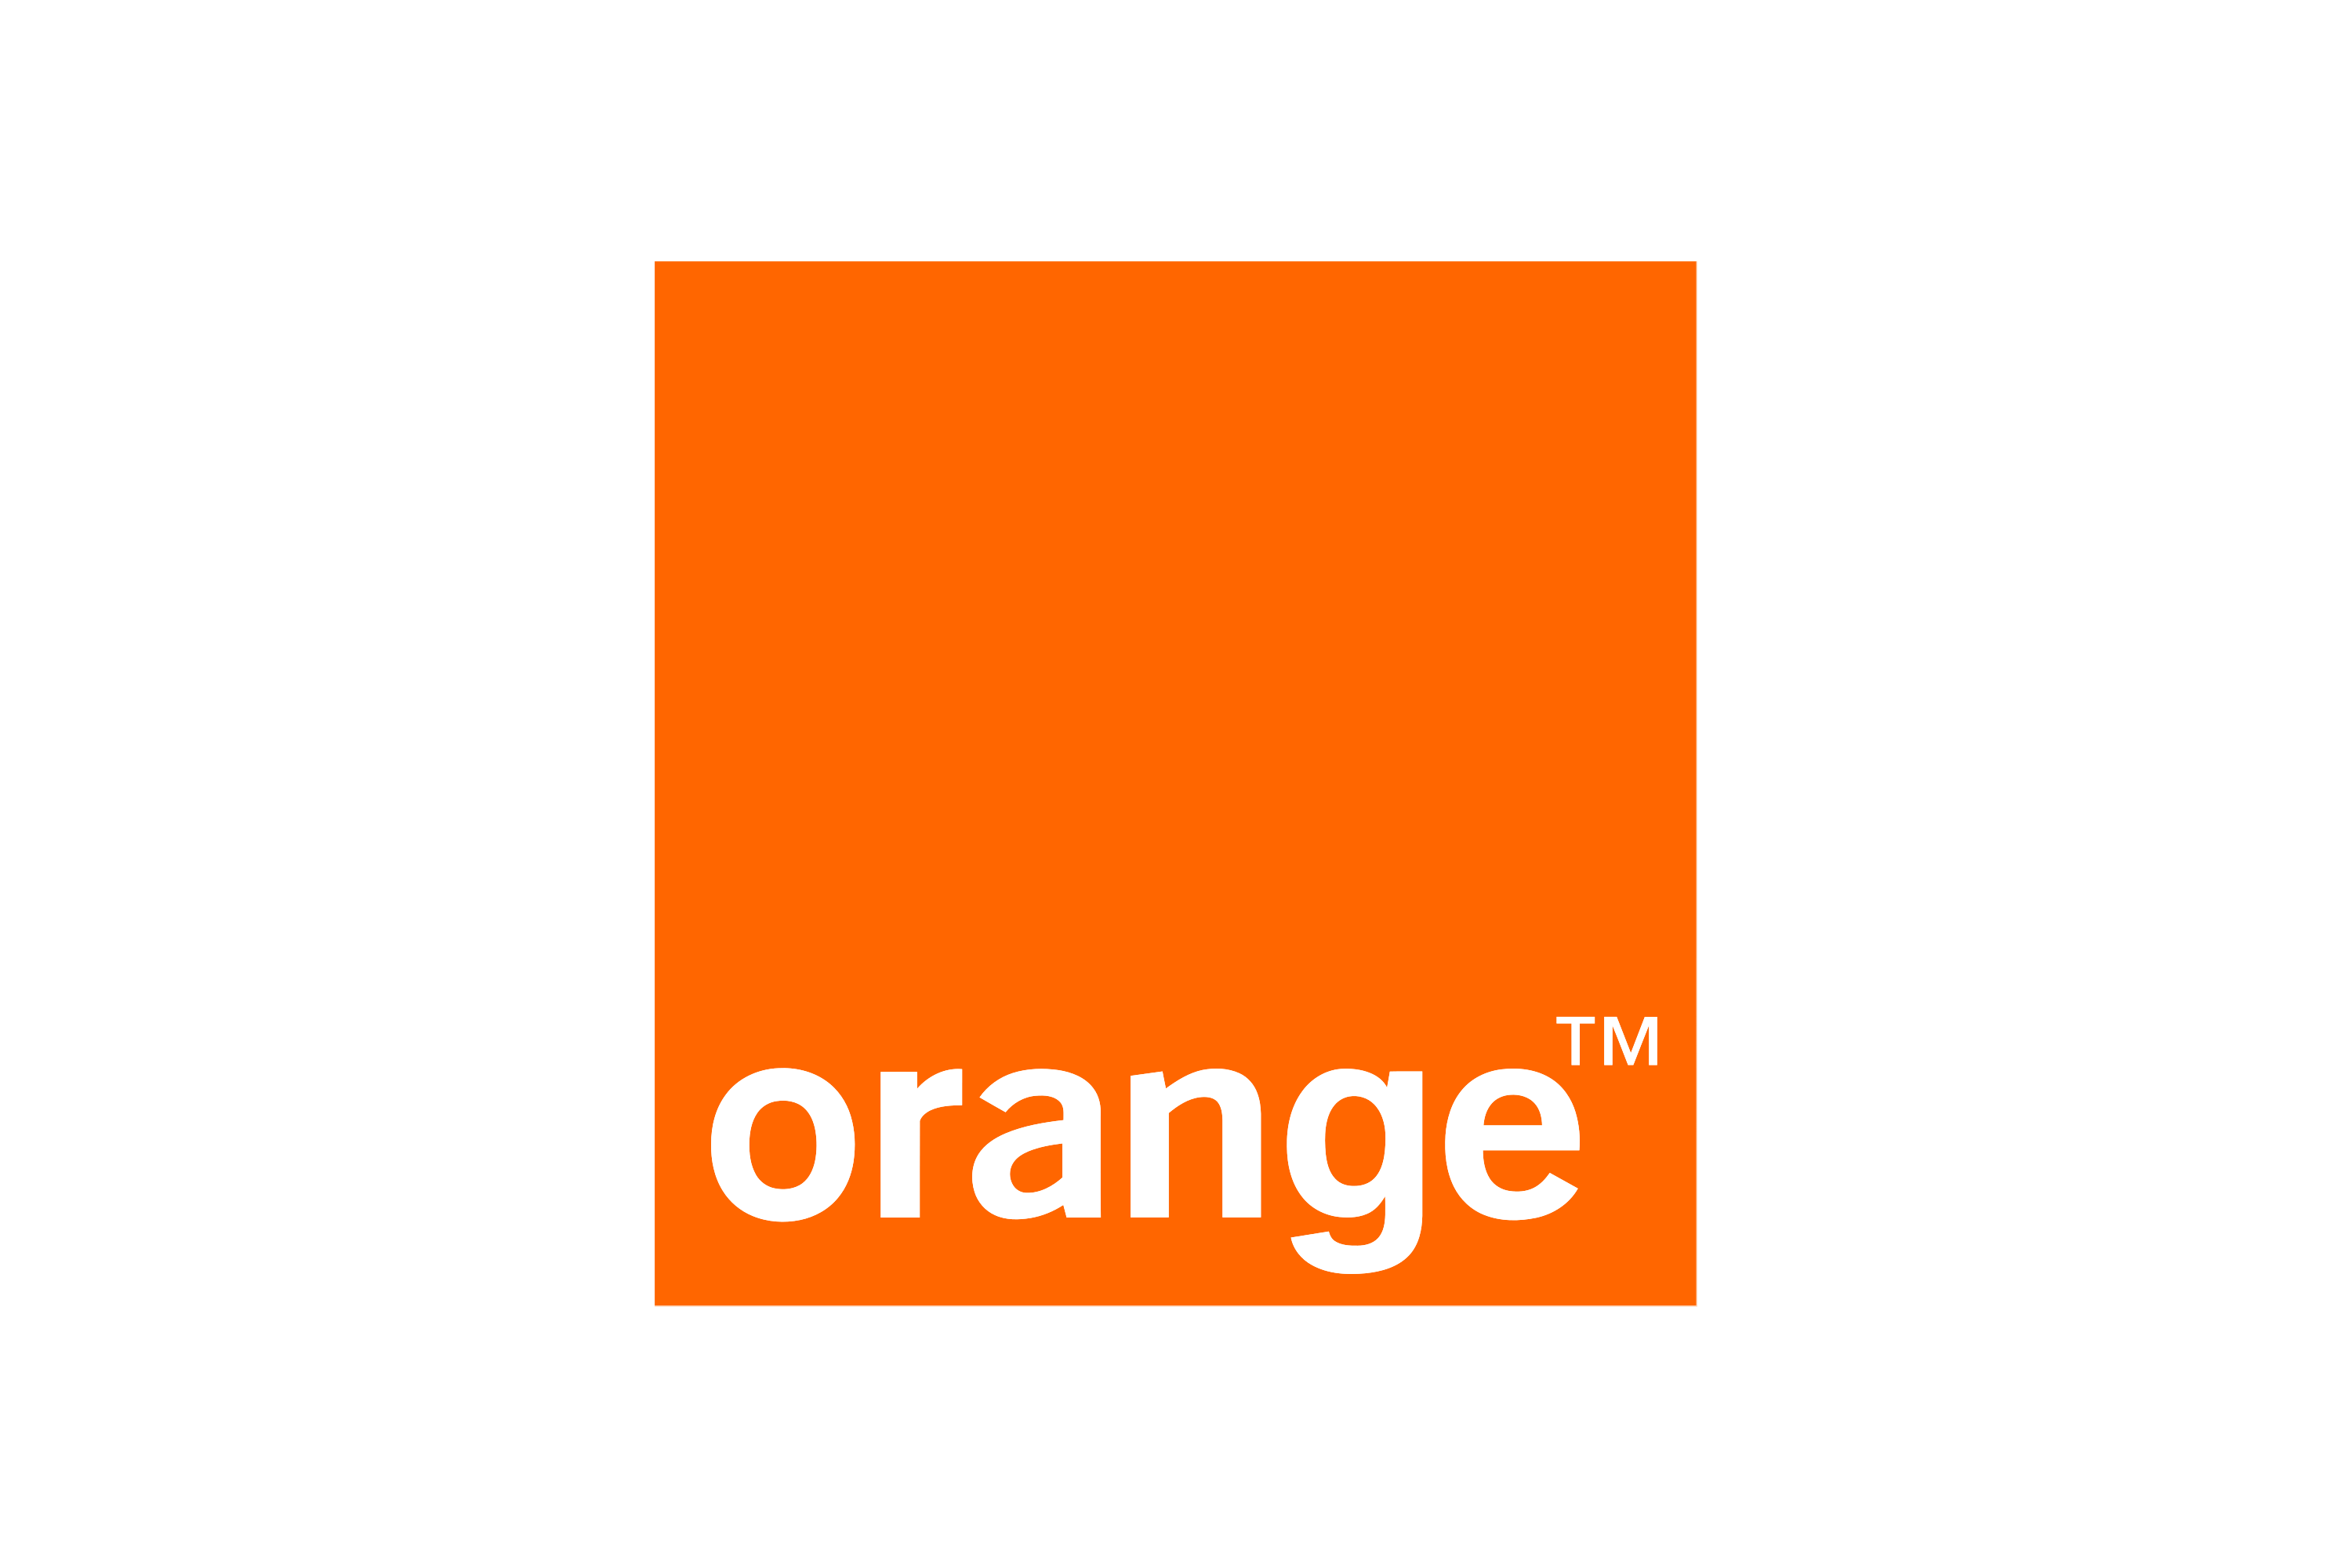 Download Orange Armenia Logo in SVG Vector or PNG File Format - Logo.wine